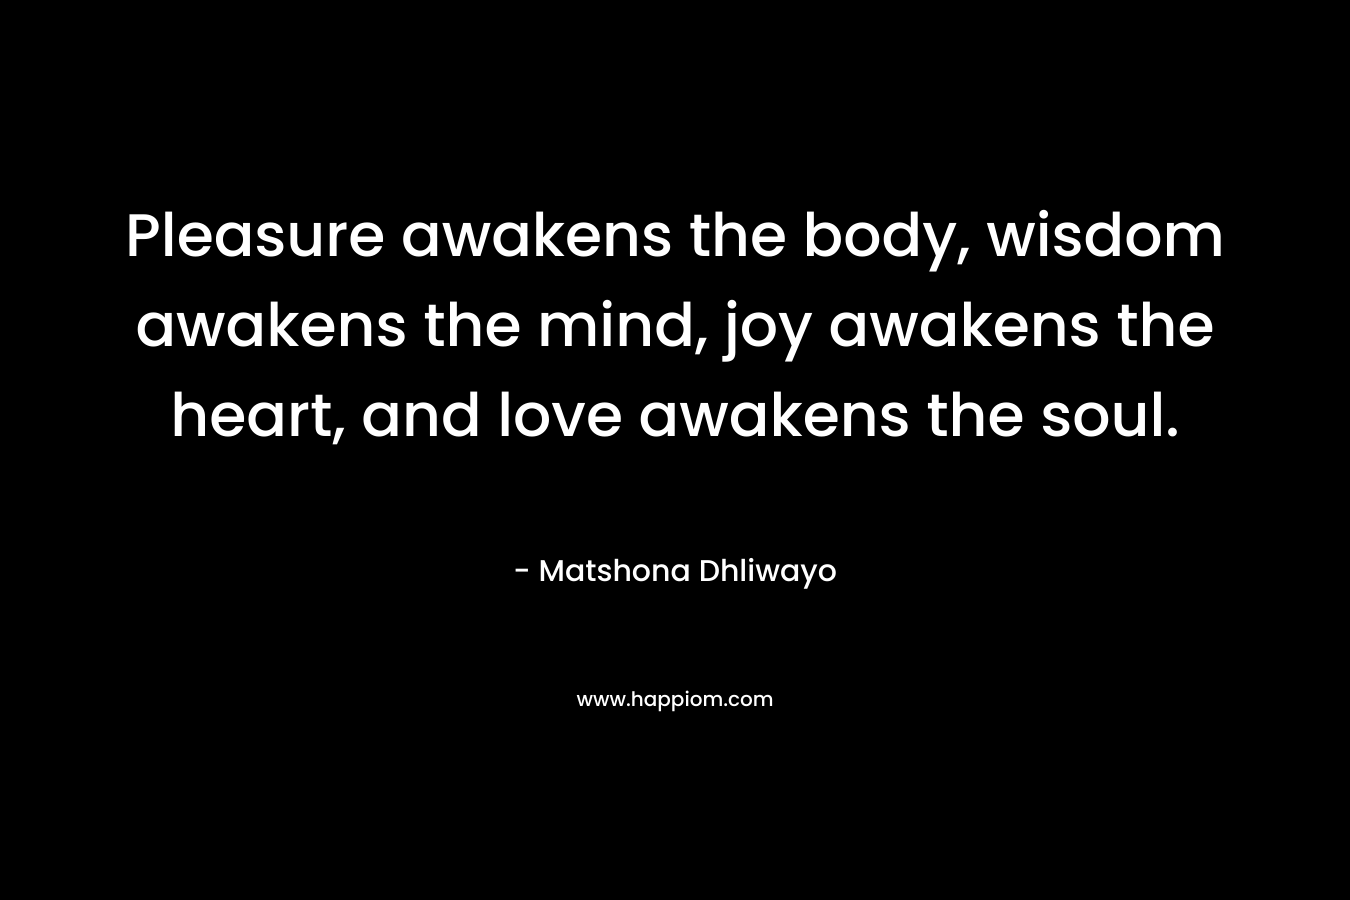 Pleasure awakens the body, wisdom awakens the mind, joy awakens the heart, and love awakens the soul.